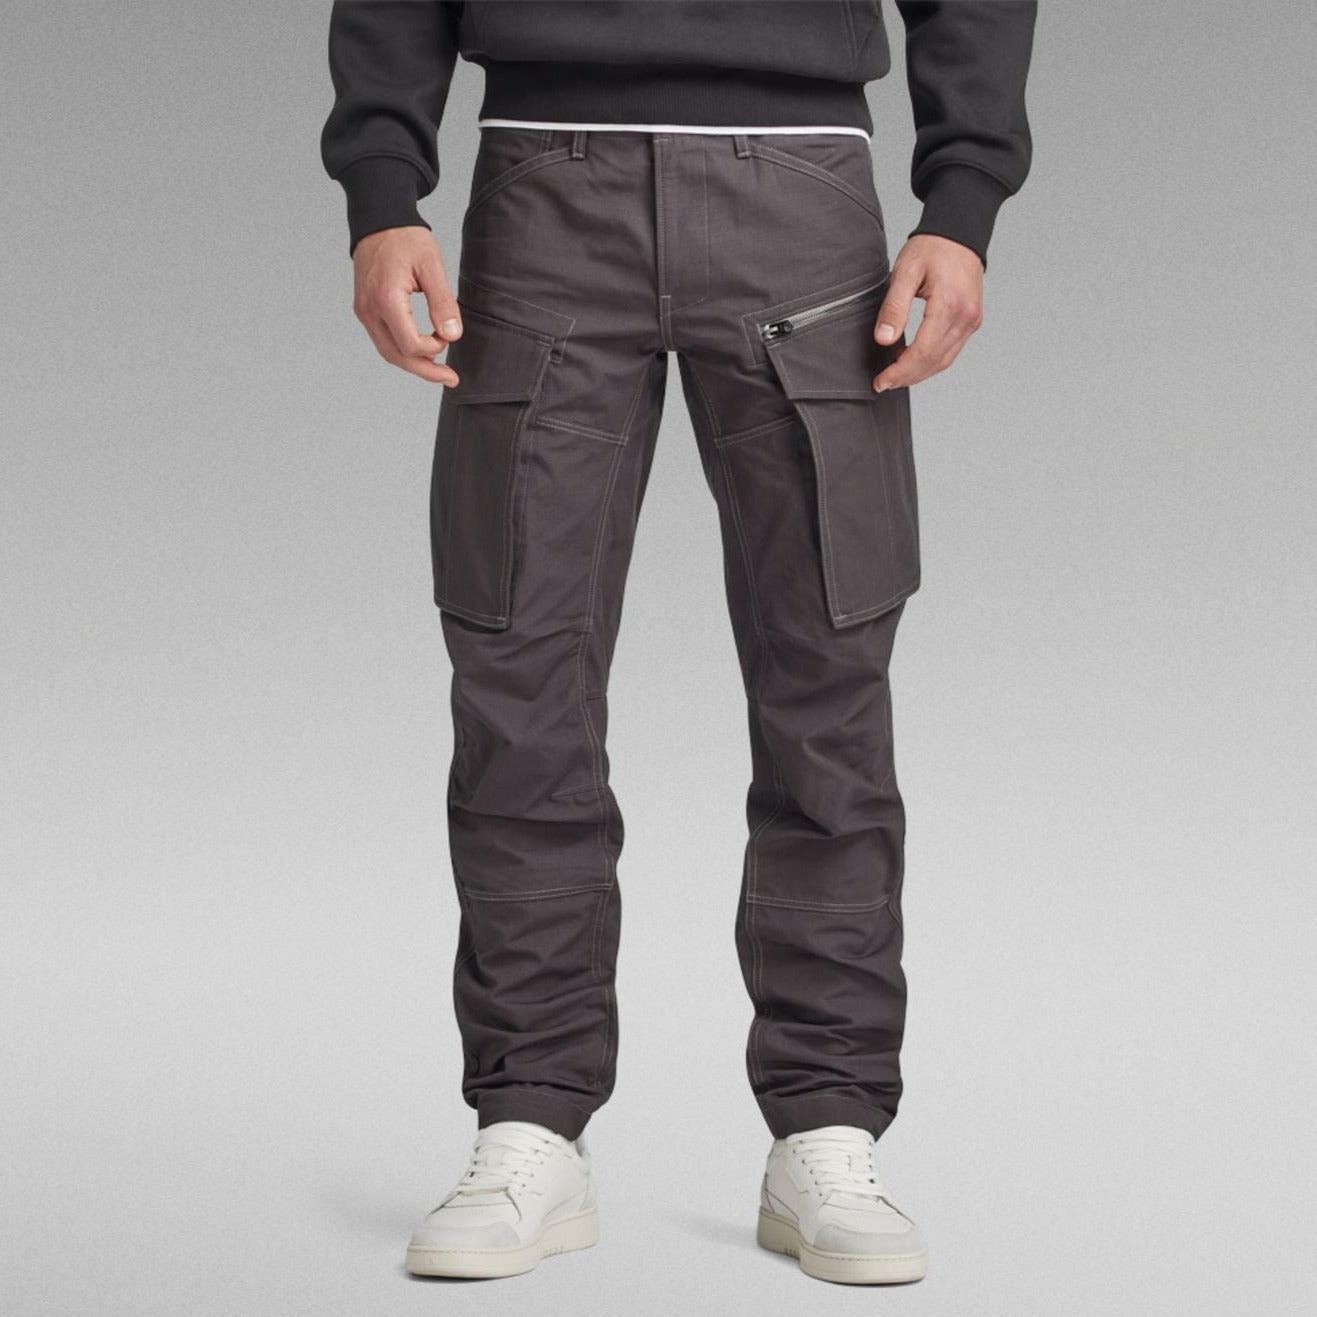 Rovic Zip 3D Regular Tapered Pants, Grey